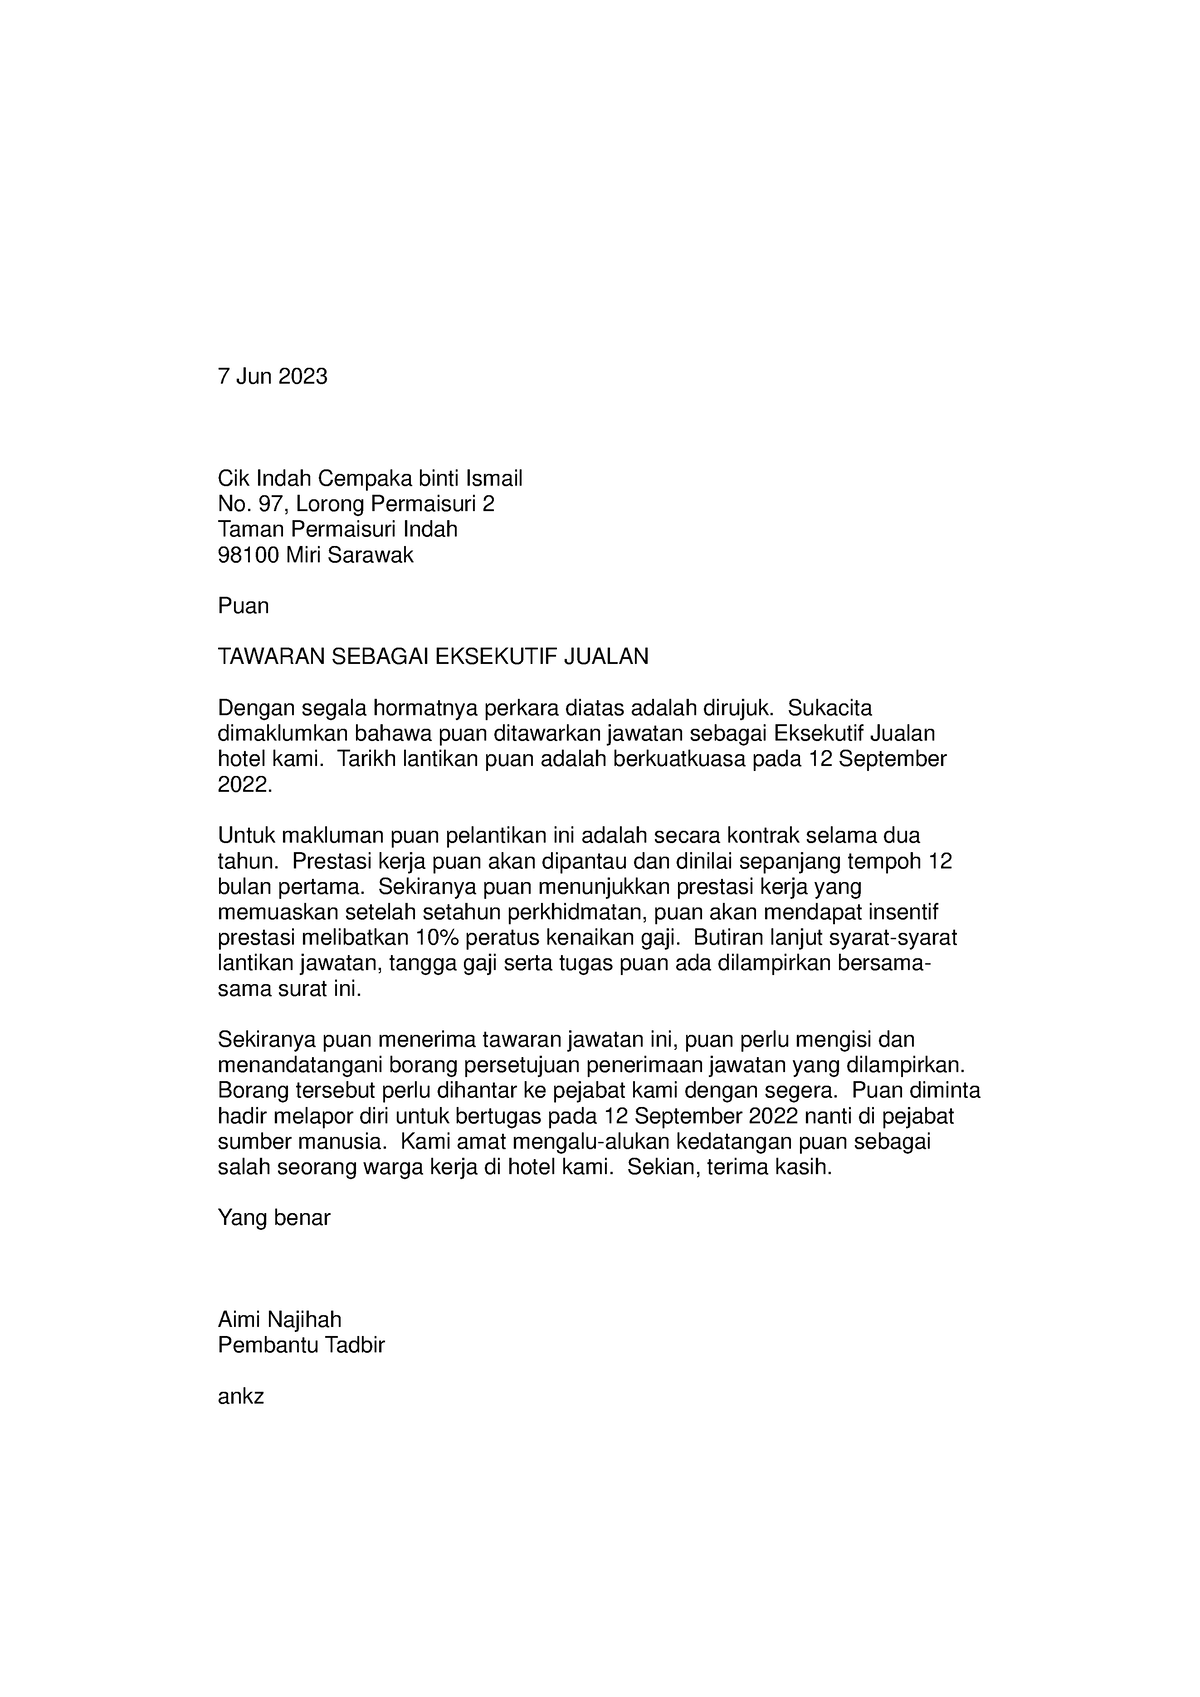 TASK 2 Q2 Business Letter - Executive Note Taking - UiTM - Studocu